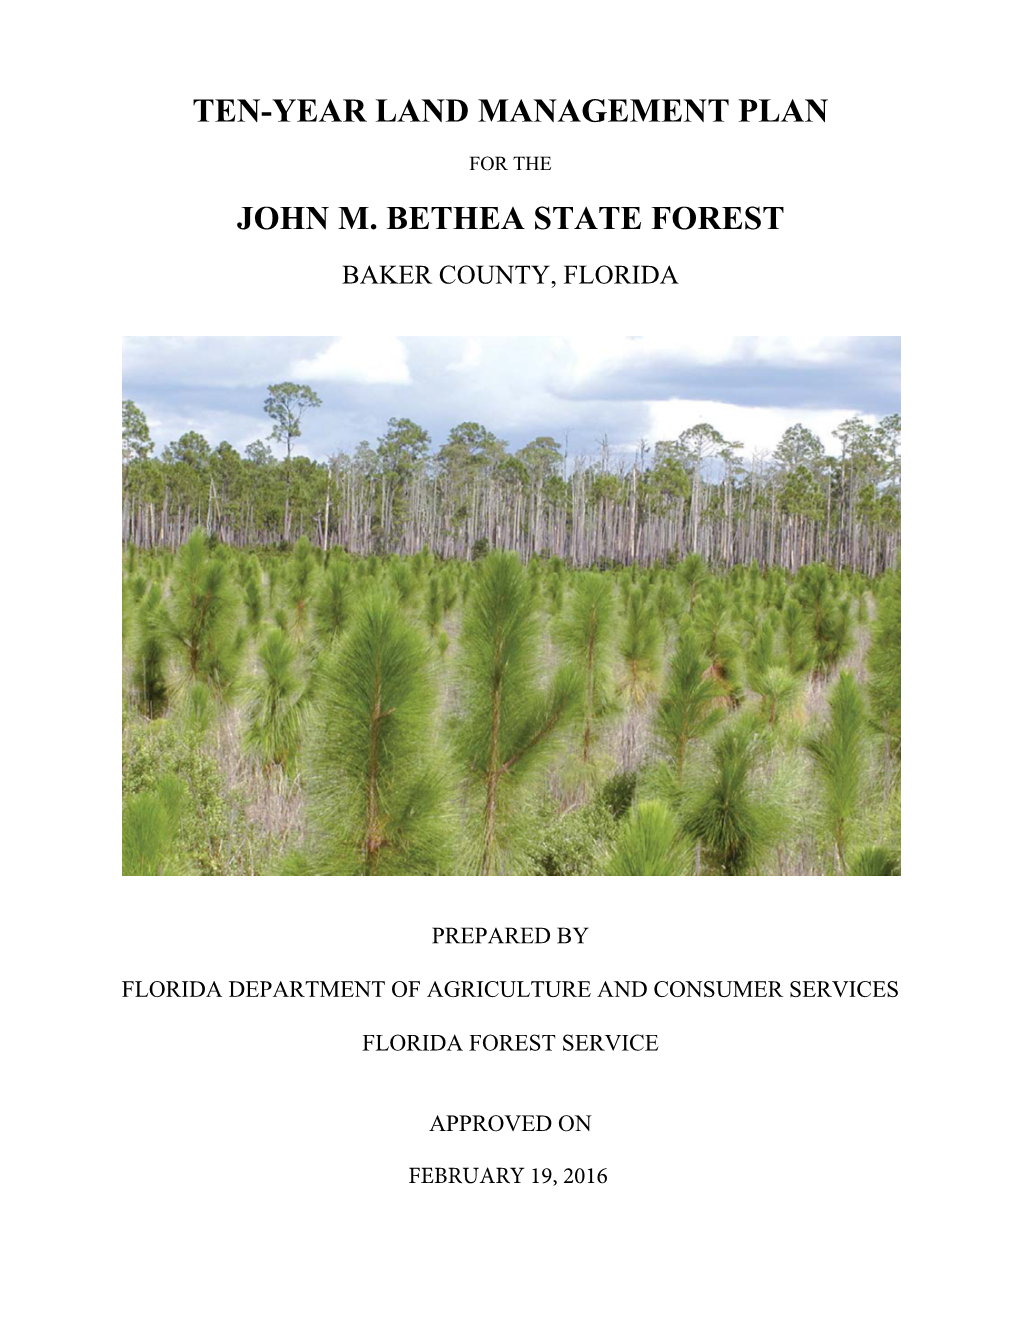 John Bethea State Forest Management Plan